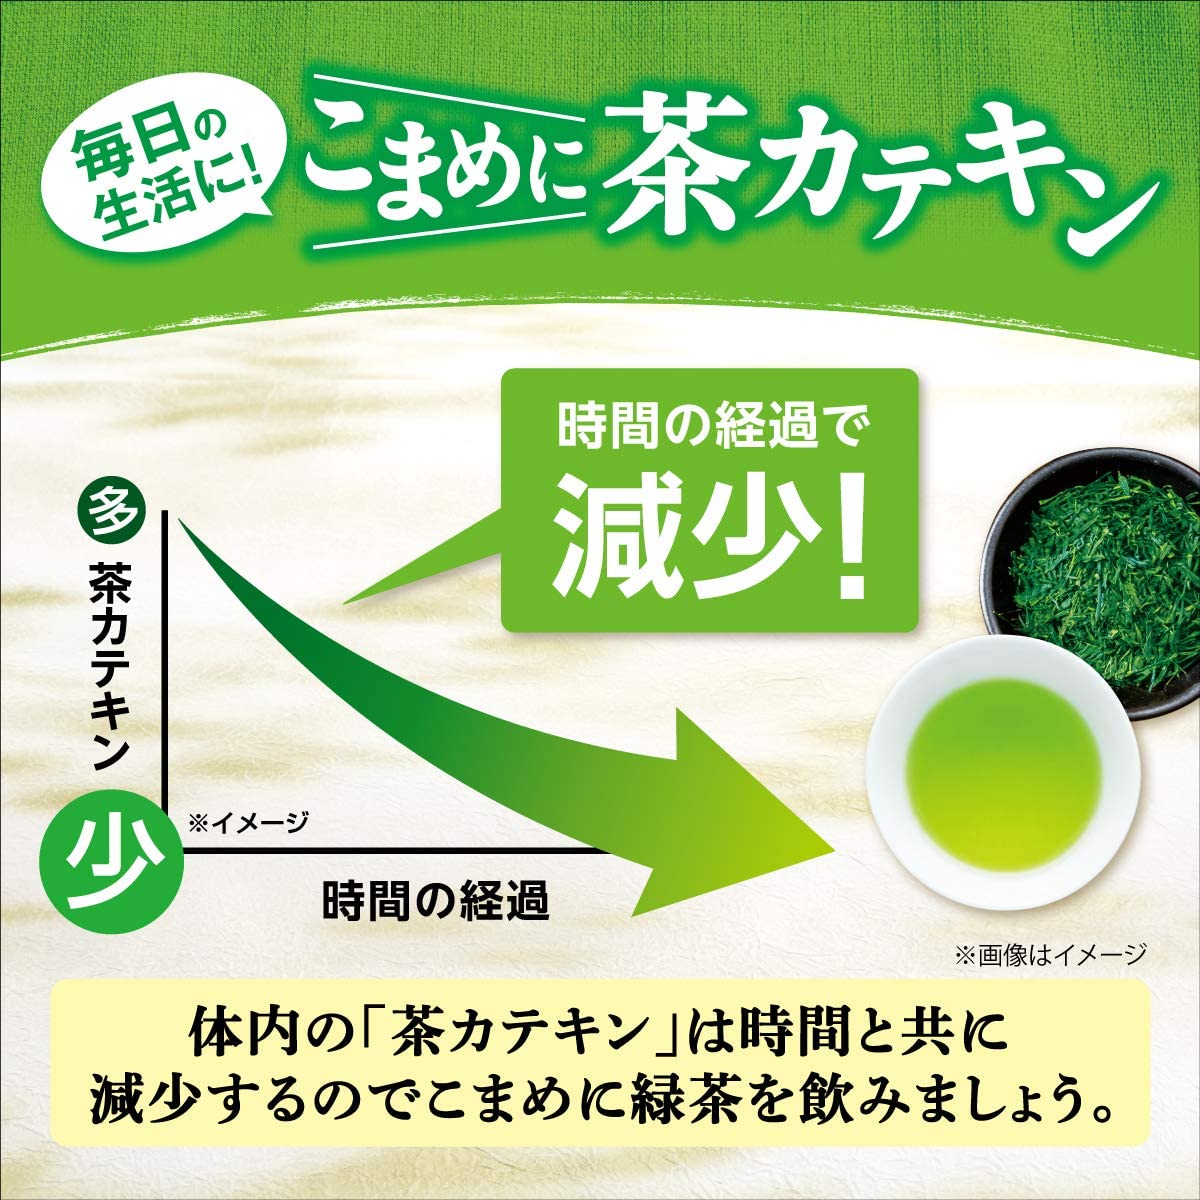 Itoen Oi Ocha smooth green tea with matcha stick type 0.8g x 100 sticks